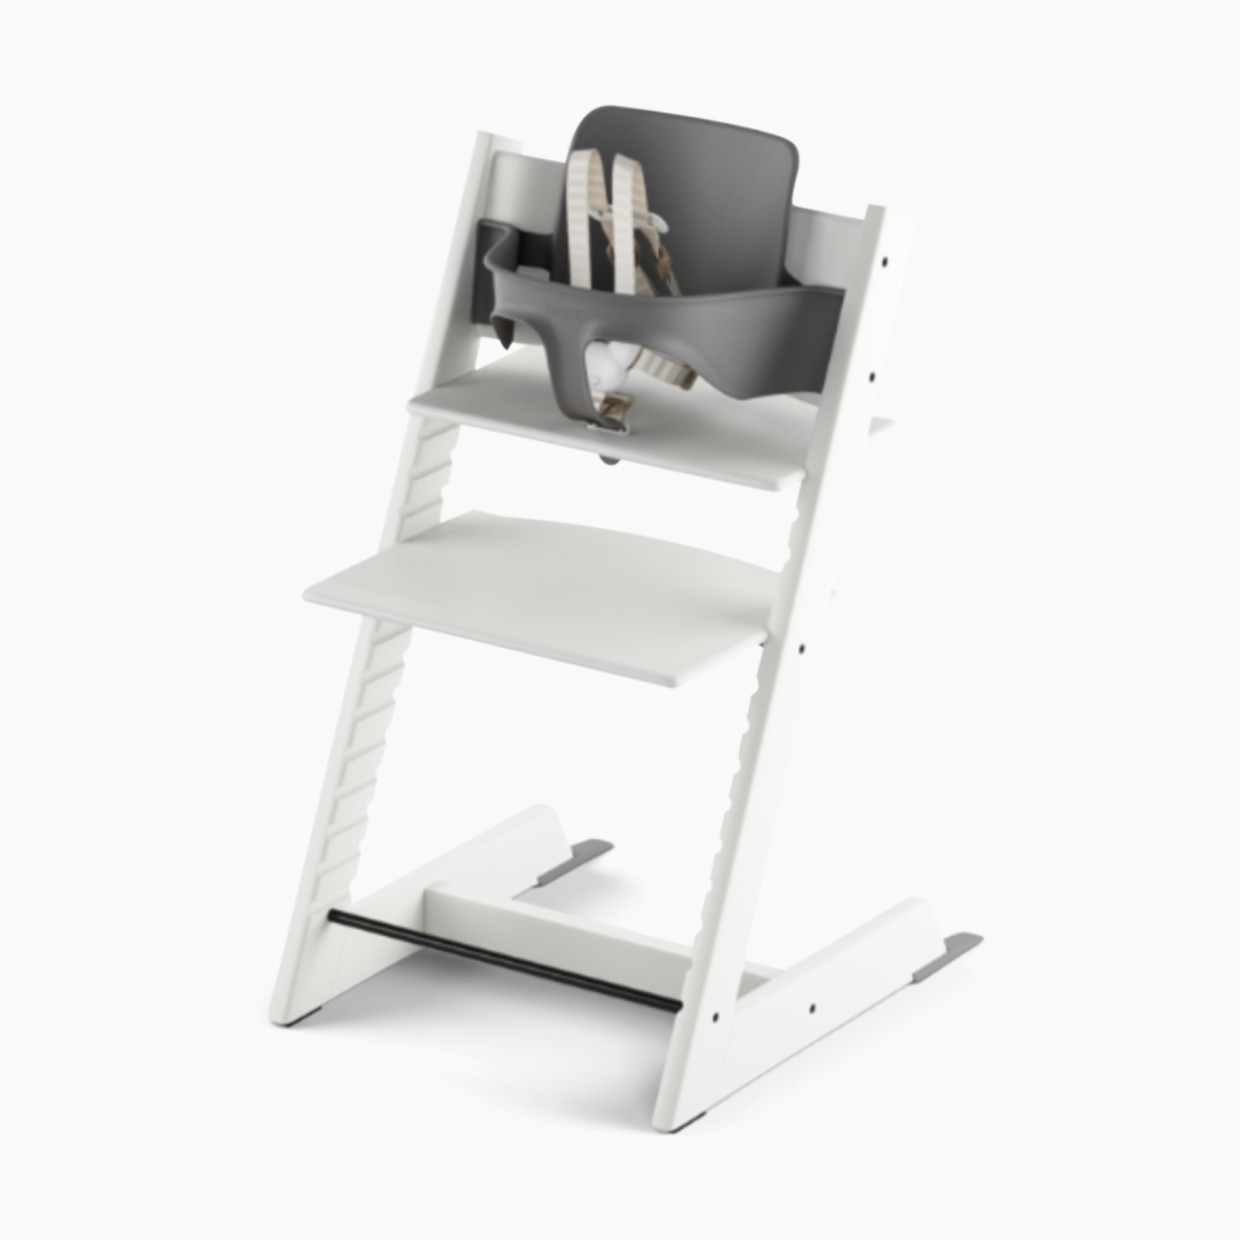 Stokke Tripp Trapp Chair & Baby Set - White Chair/Storm Grey Set.